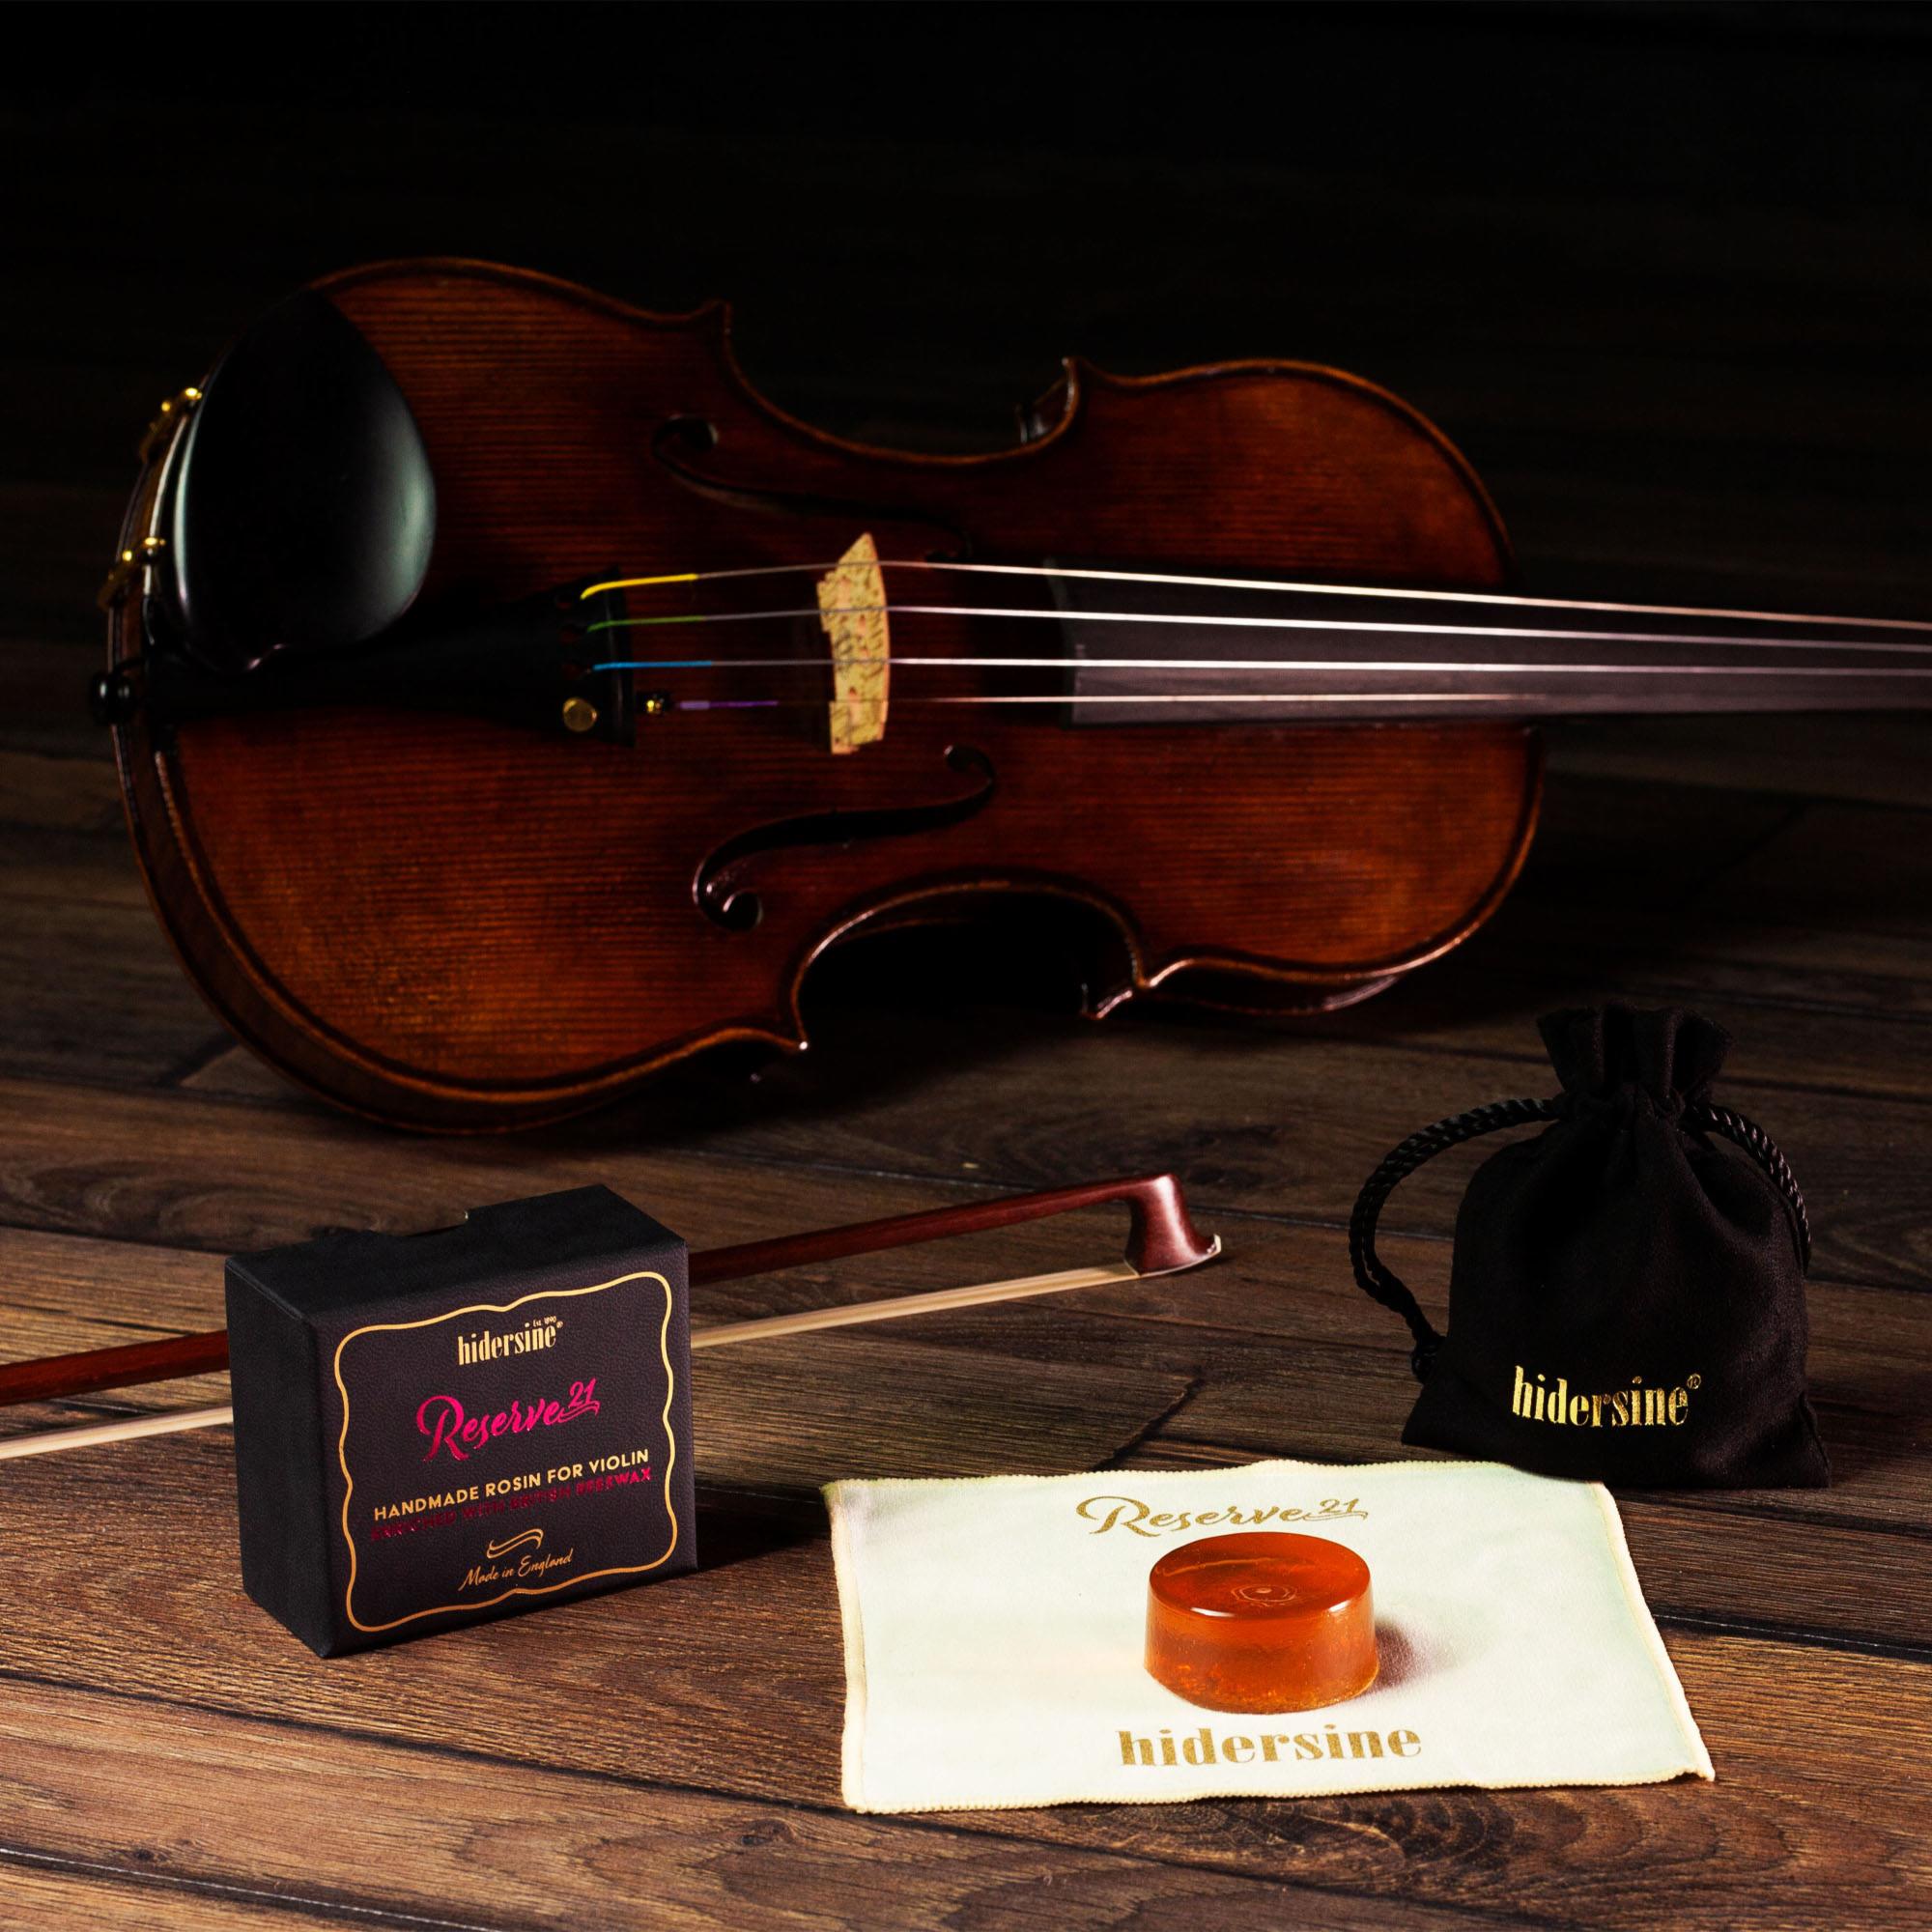 Hidersine Reserve 21 Violin/Viola/Cello Rosin